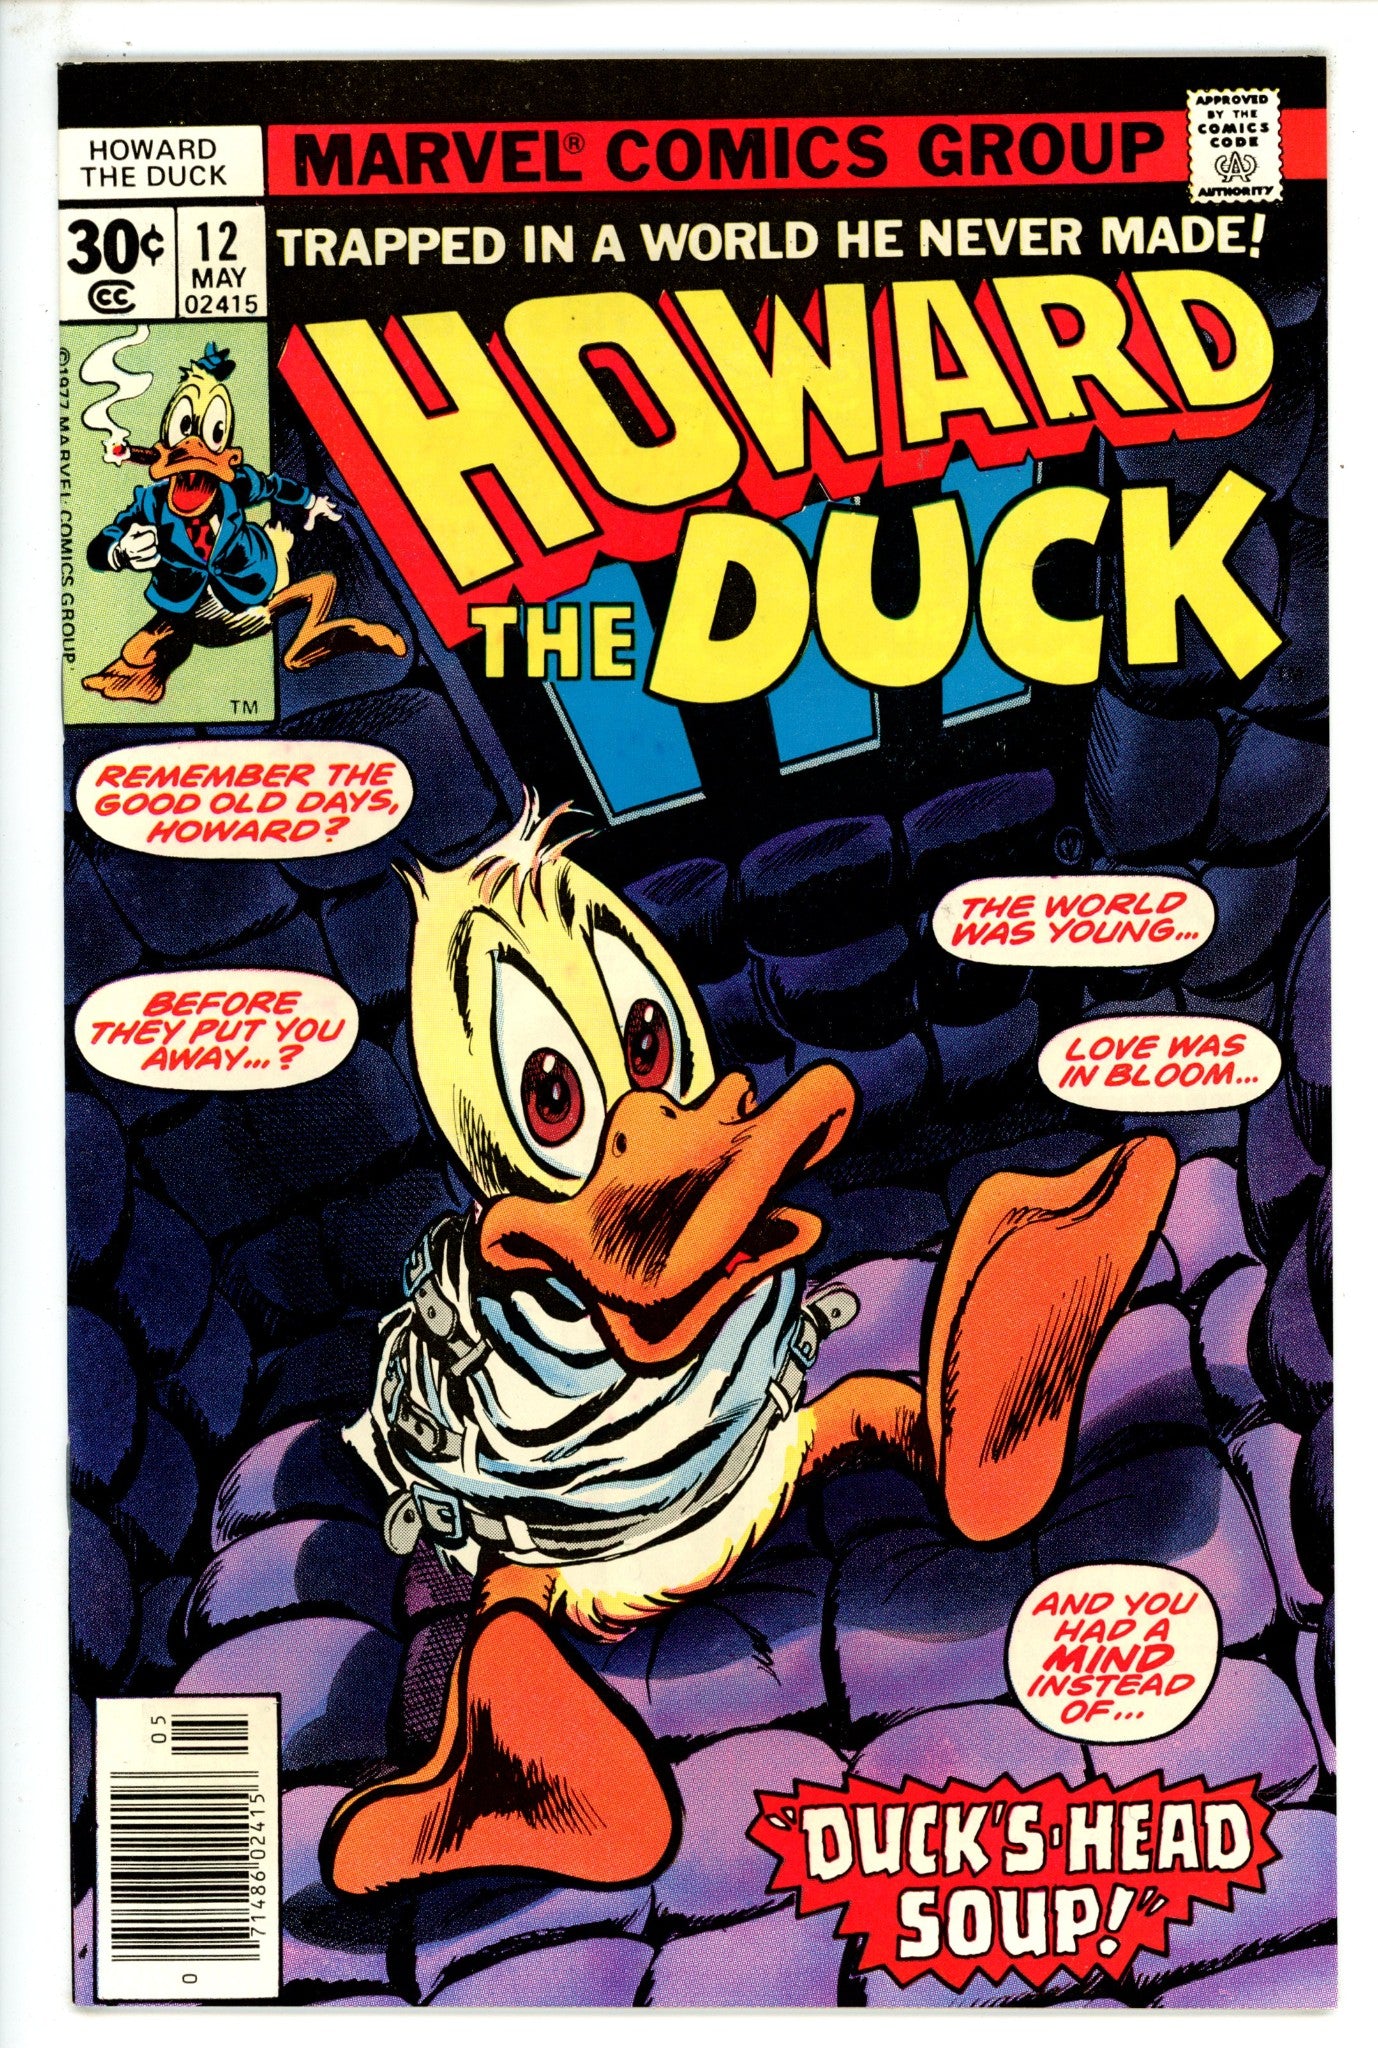 Howard the Duck Vol 1 12 VF/NM (9.0) (1977) 